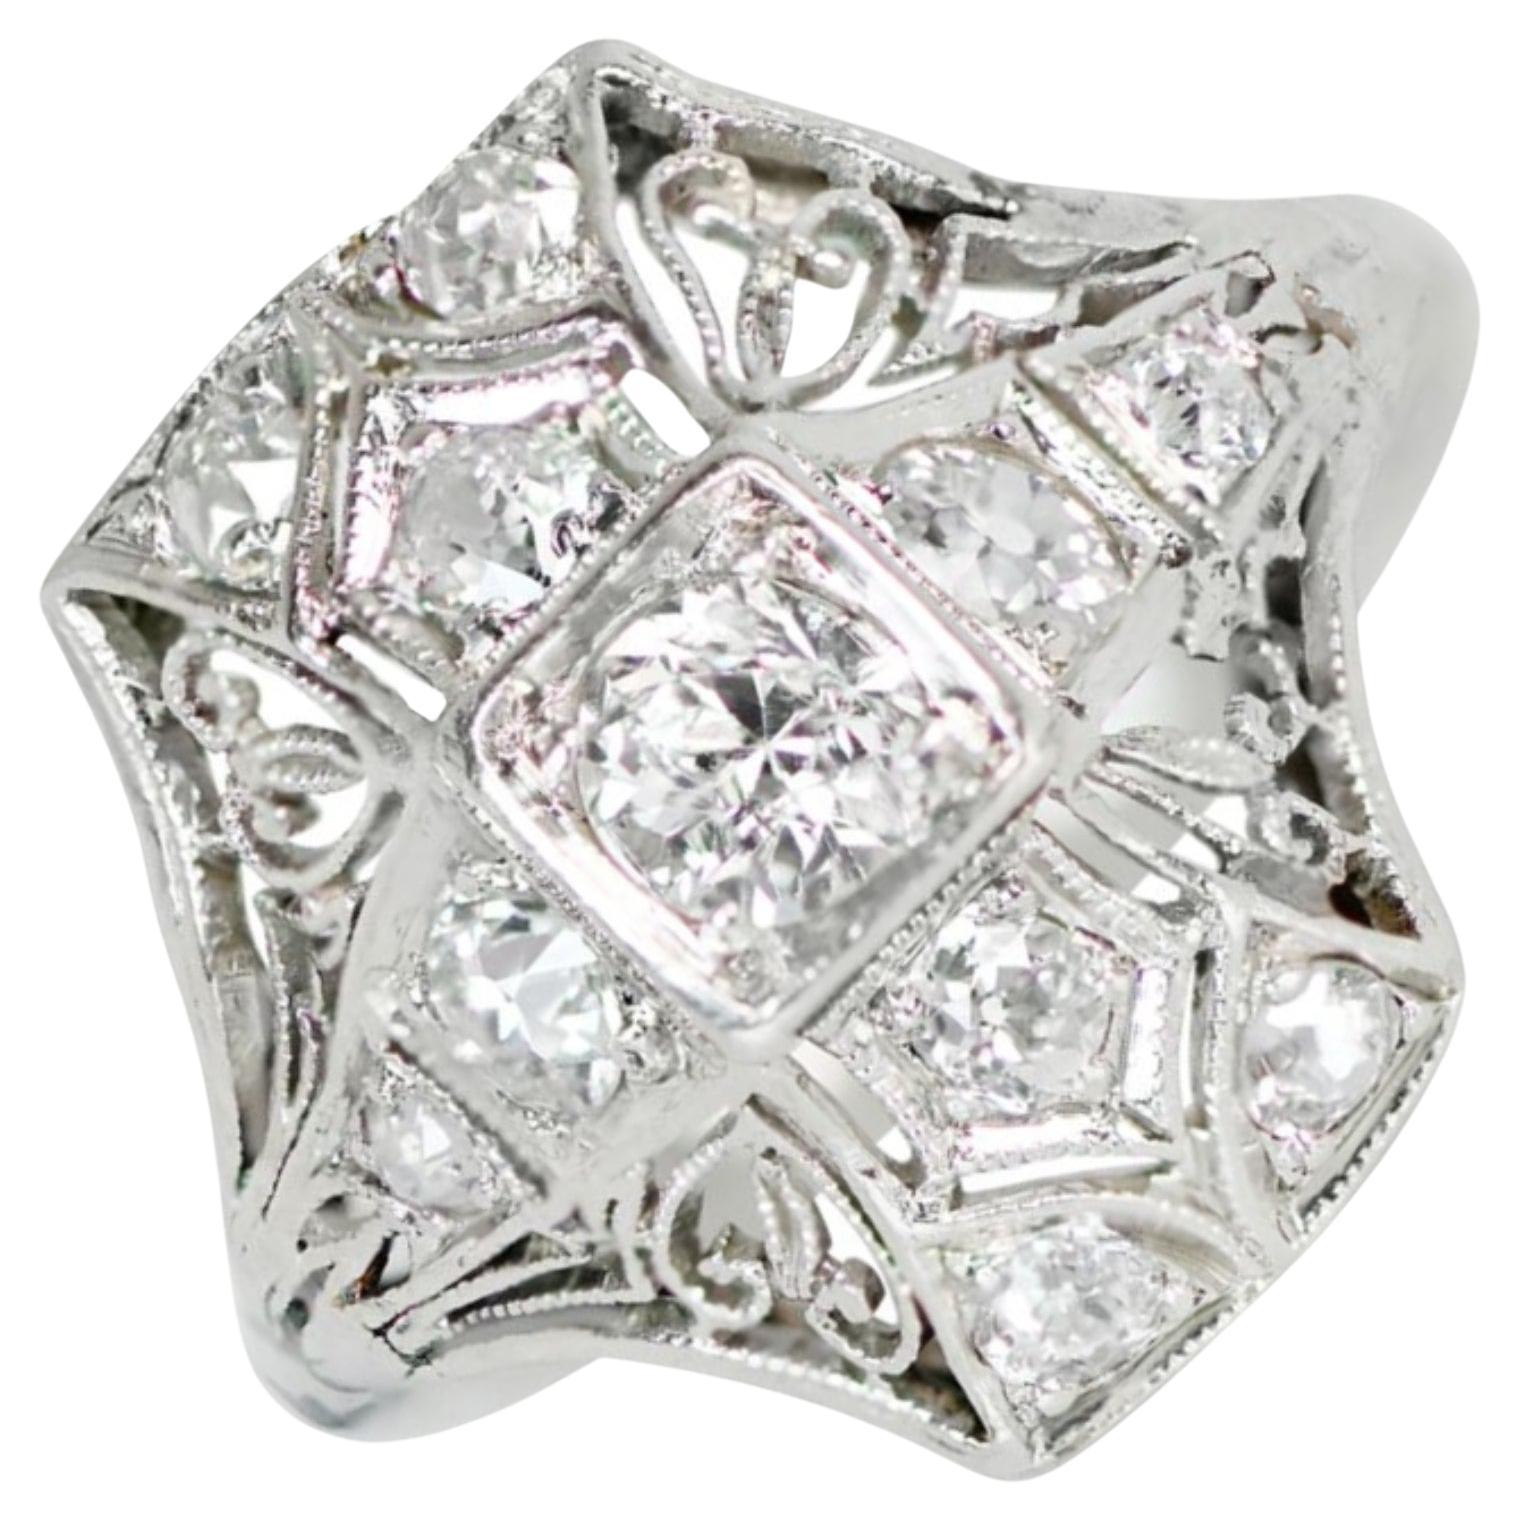 Vintage 0.30ct Old European Cut Diamond Engagement Ring, H Color, Platinum